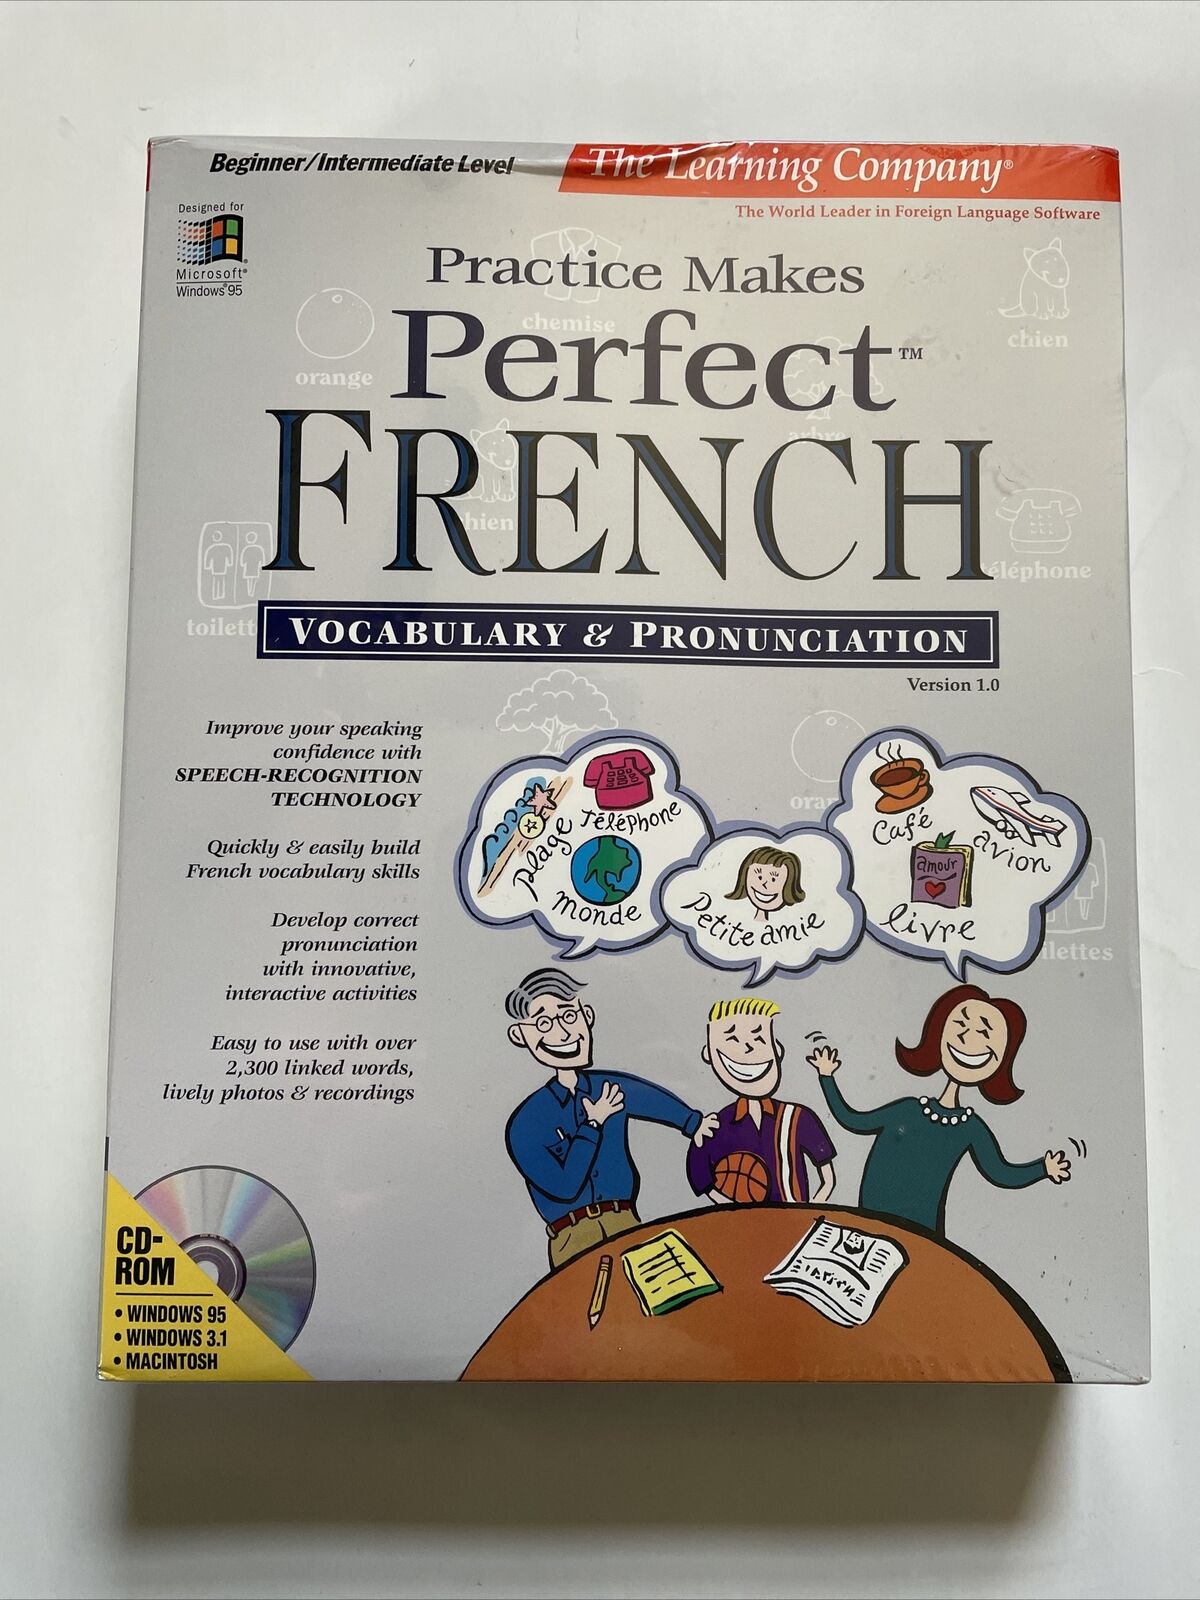 Practice Makes Perfect French Vintage Windows 95, Windows 3.1 Macintosh Sealed